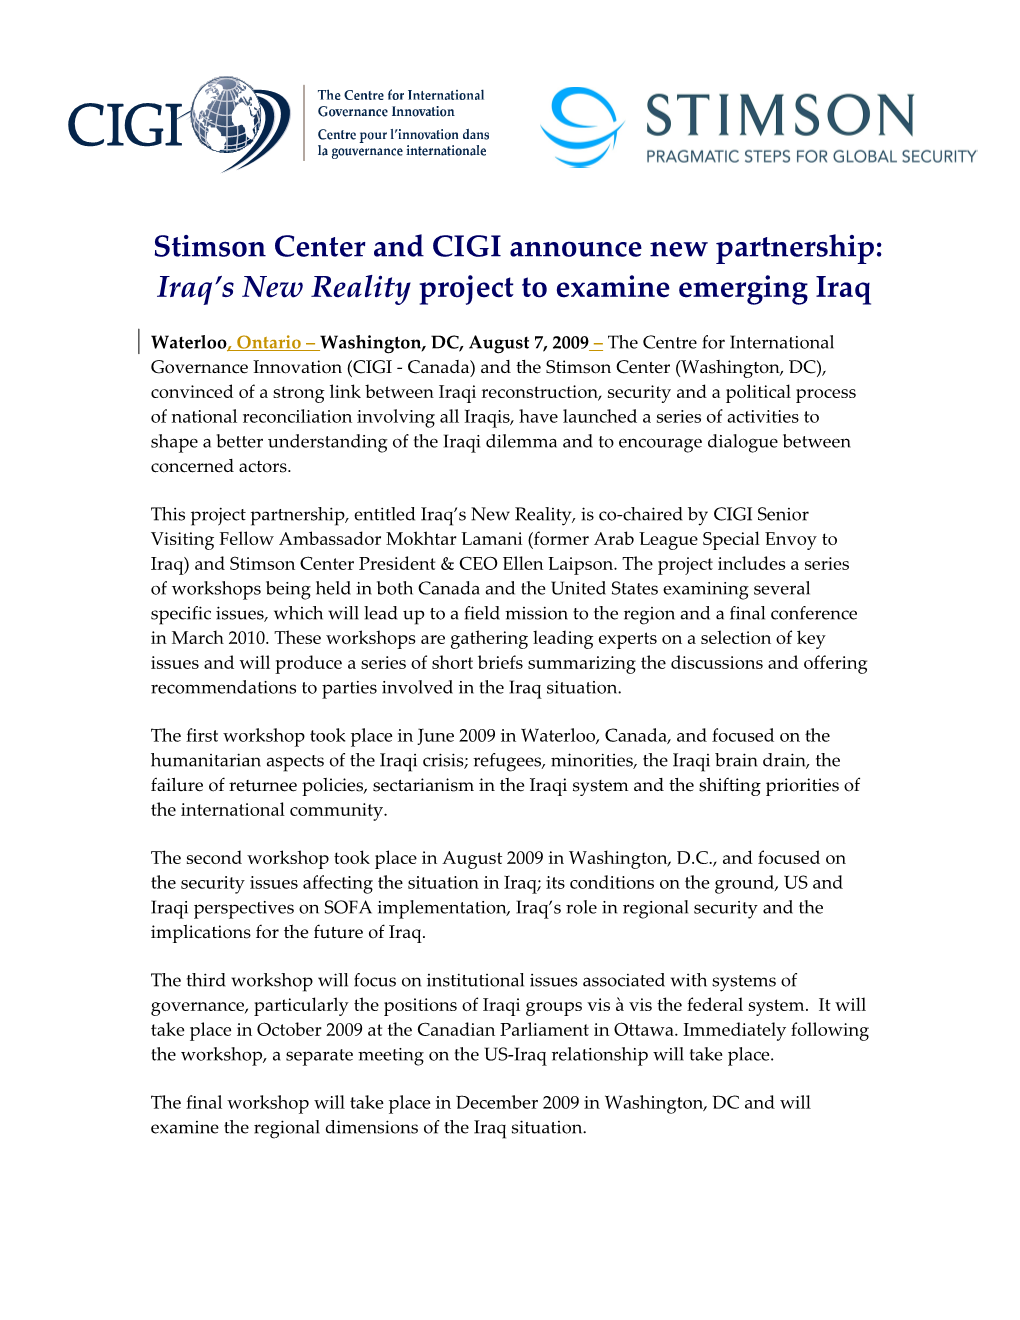 Stimson Center and CIGI Announce New Partnership:Iraq S New Reality Project to Examine